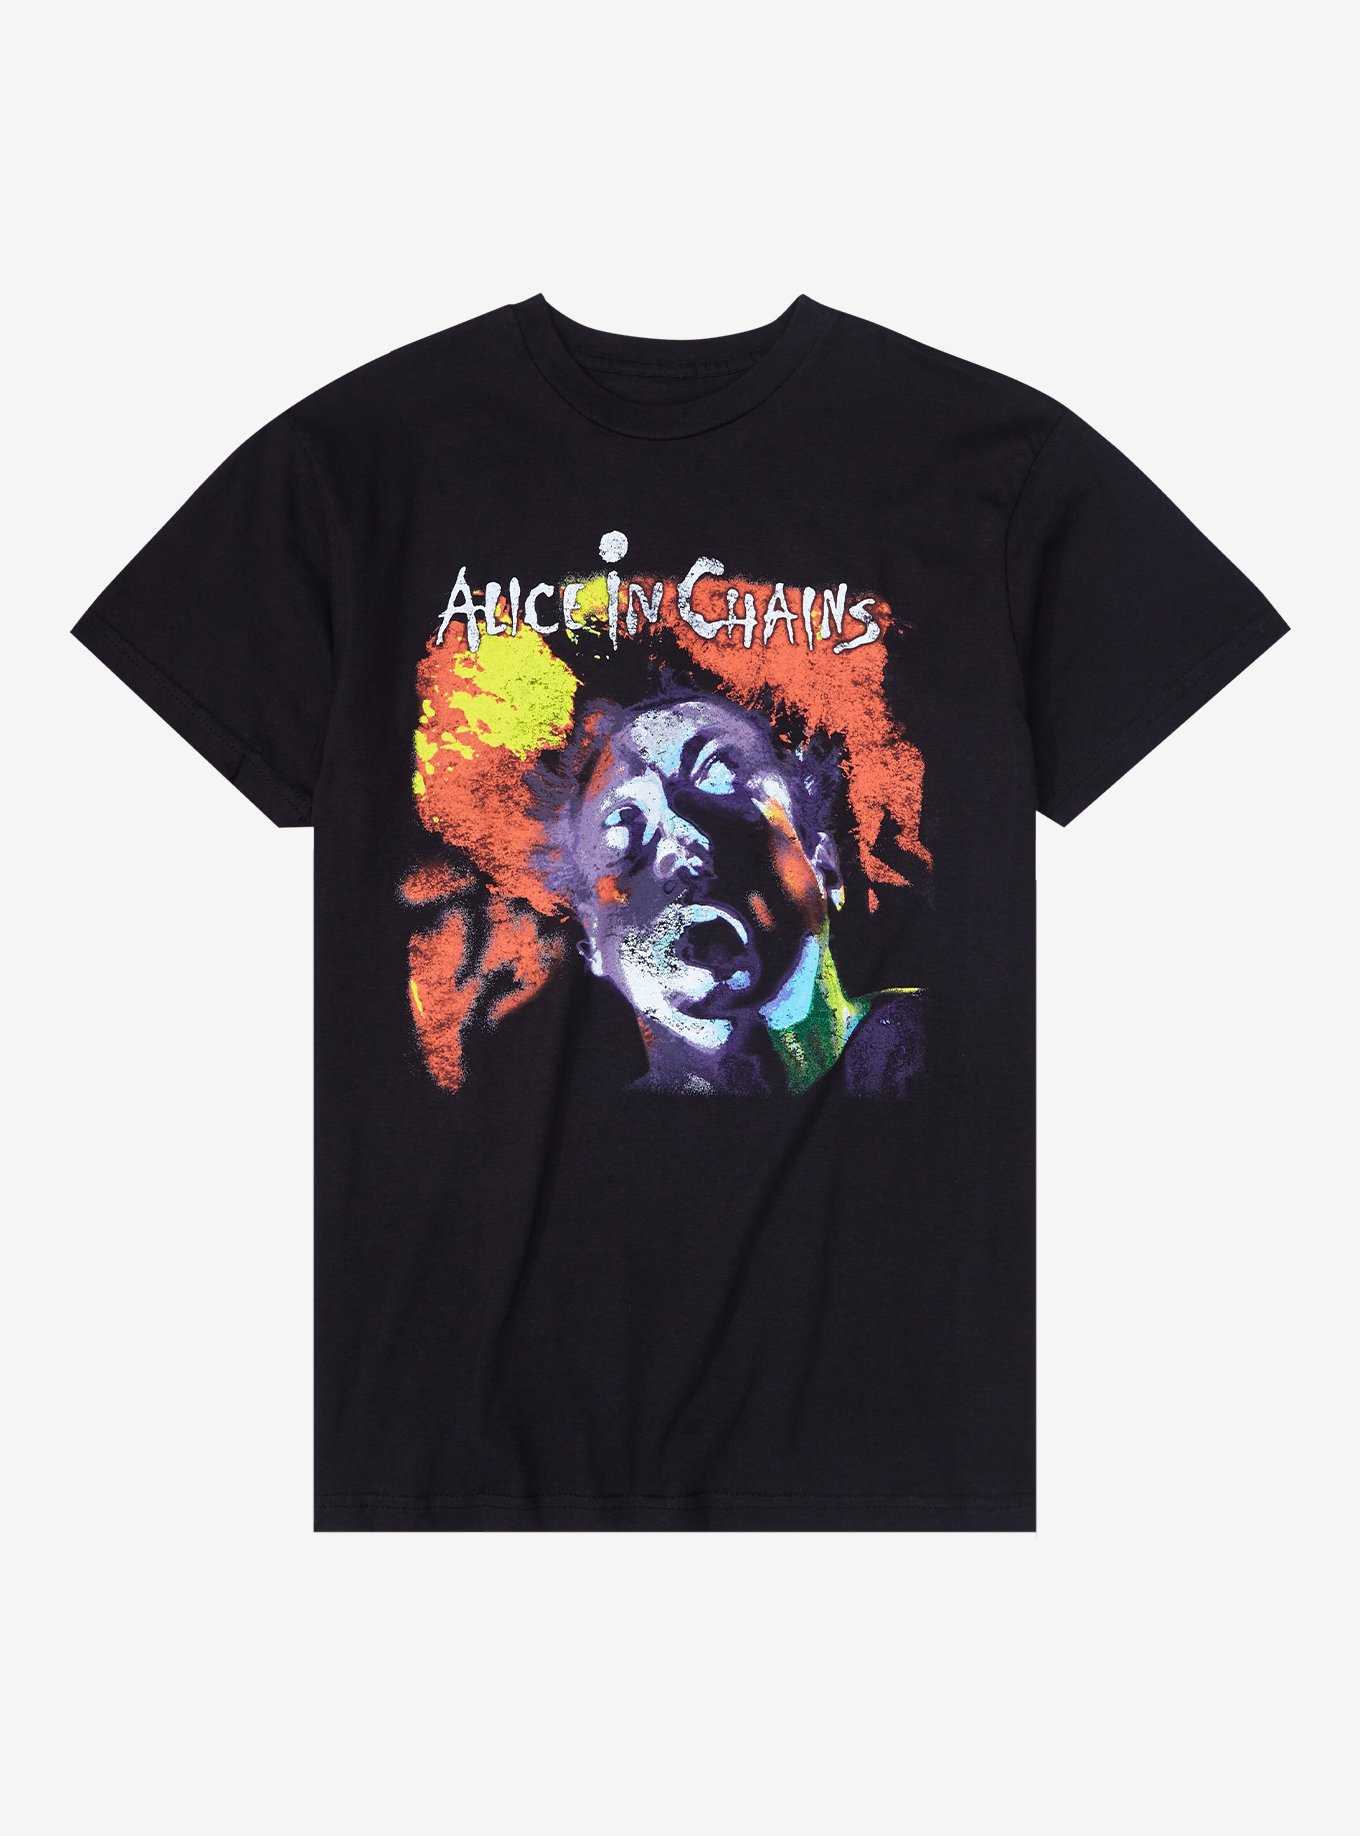 Alice In Chains Facelift Album Cover Boyfriend Fit Girls T-Shirt, , hi-res